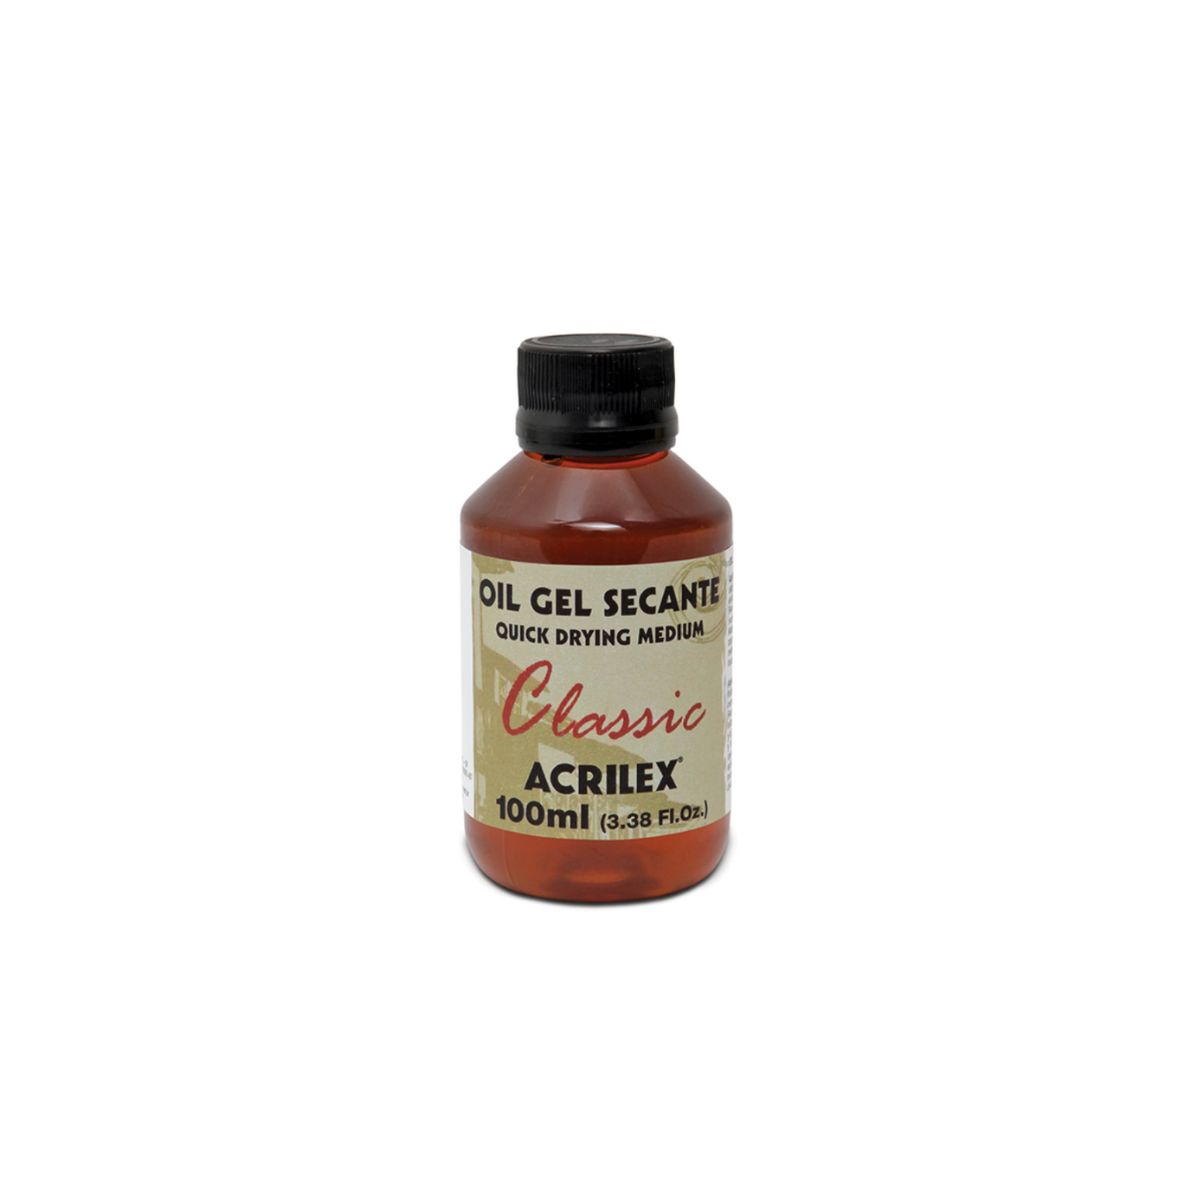 Oil Gel Secante 100ml Acrilex